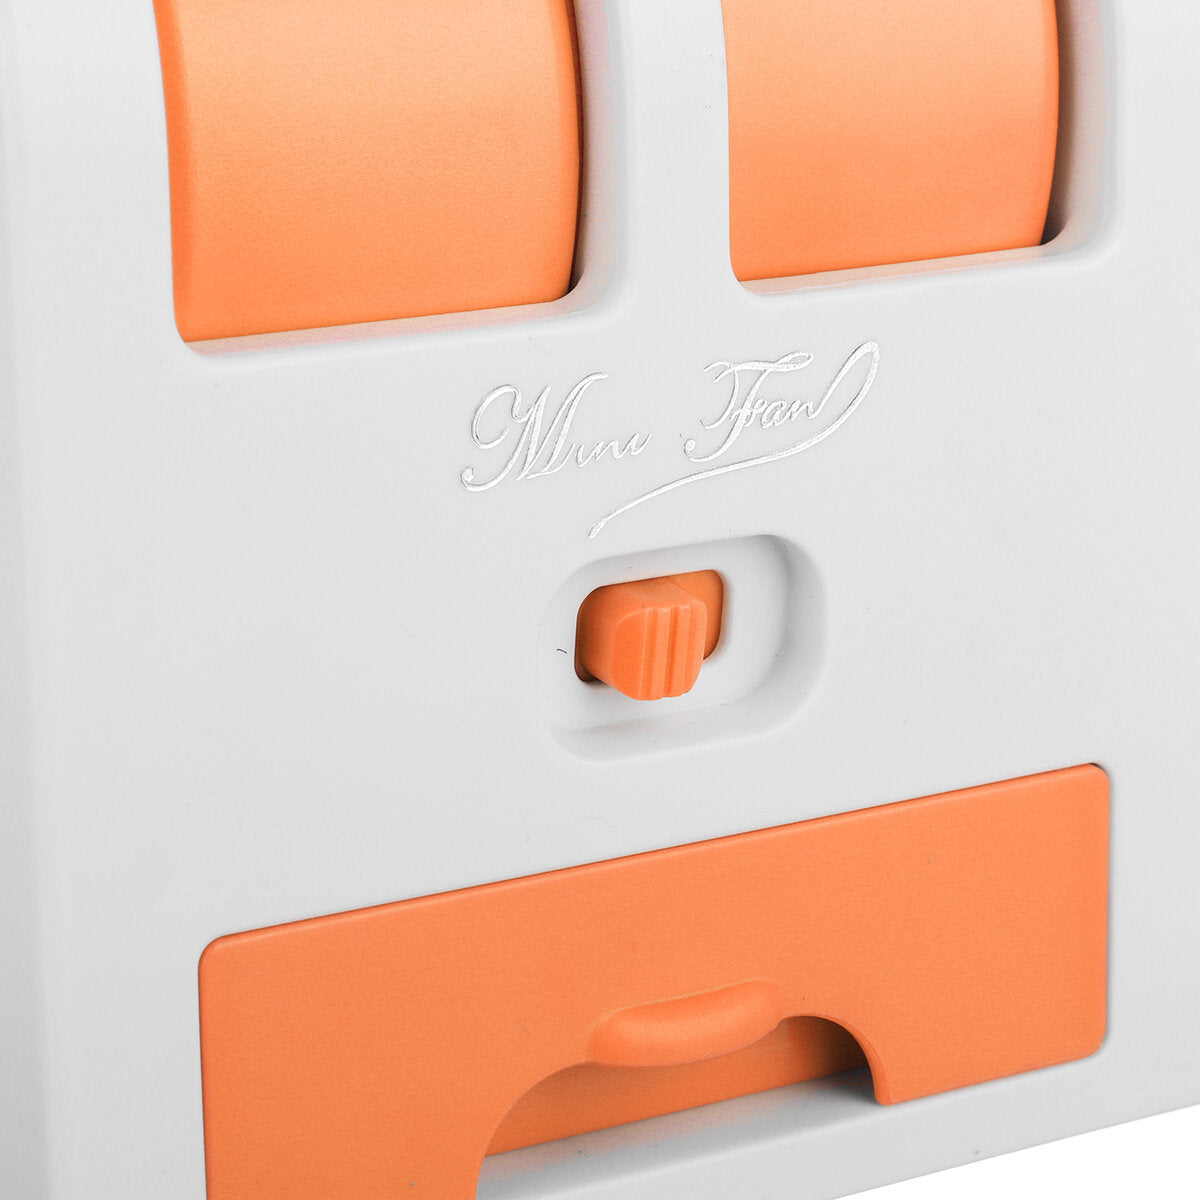 USB Mini Portable Desktop Air Conditioner Small Fan Cooling Humidifier Cooler